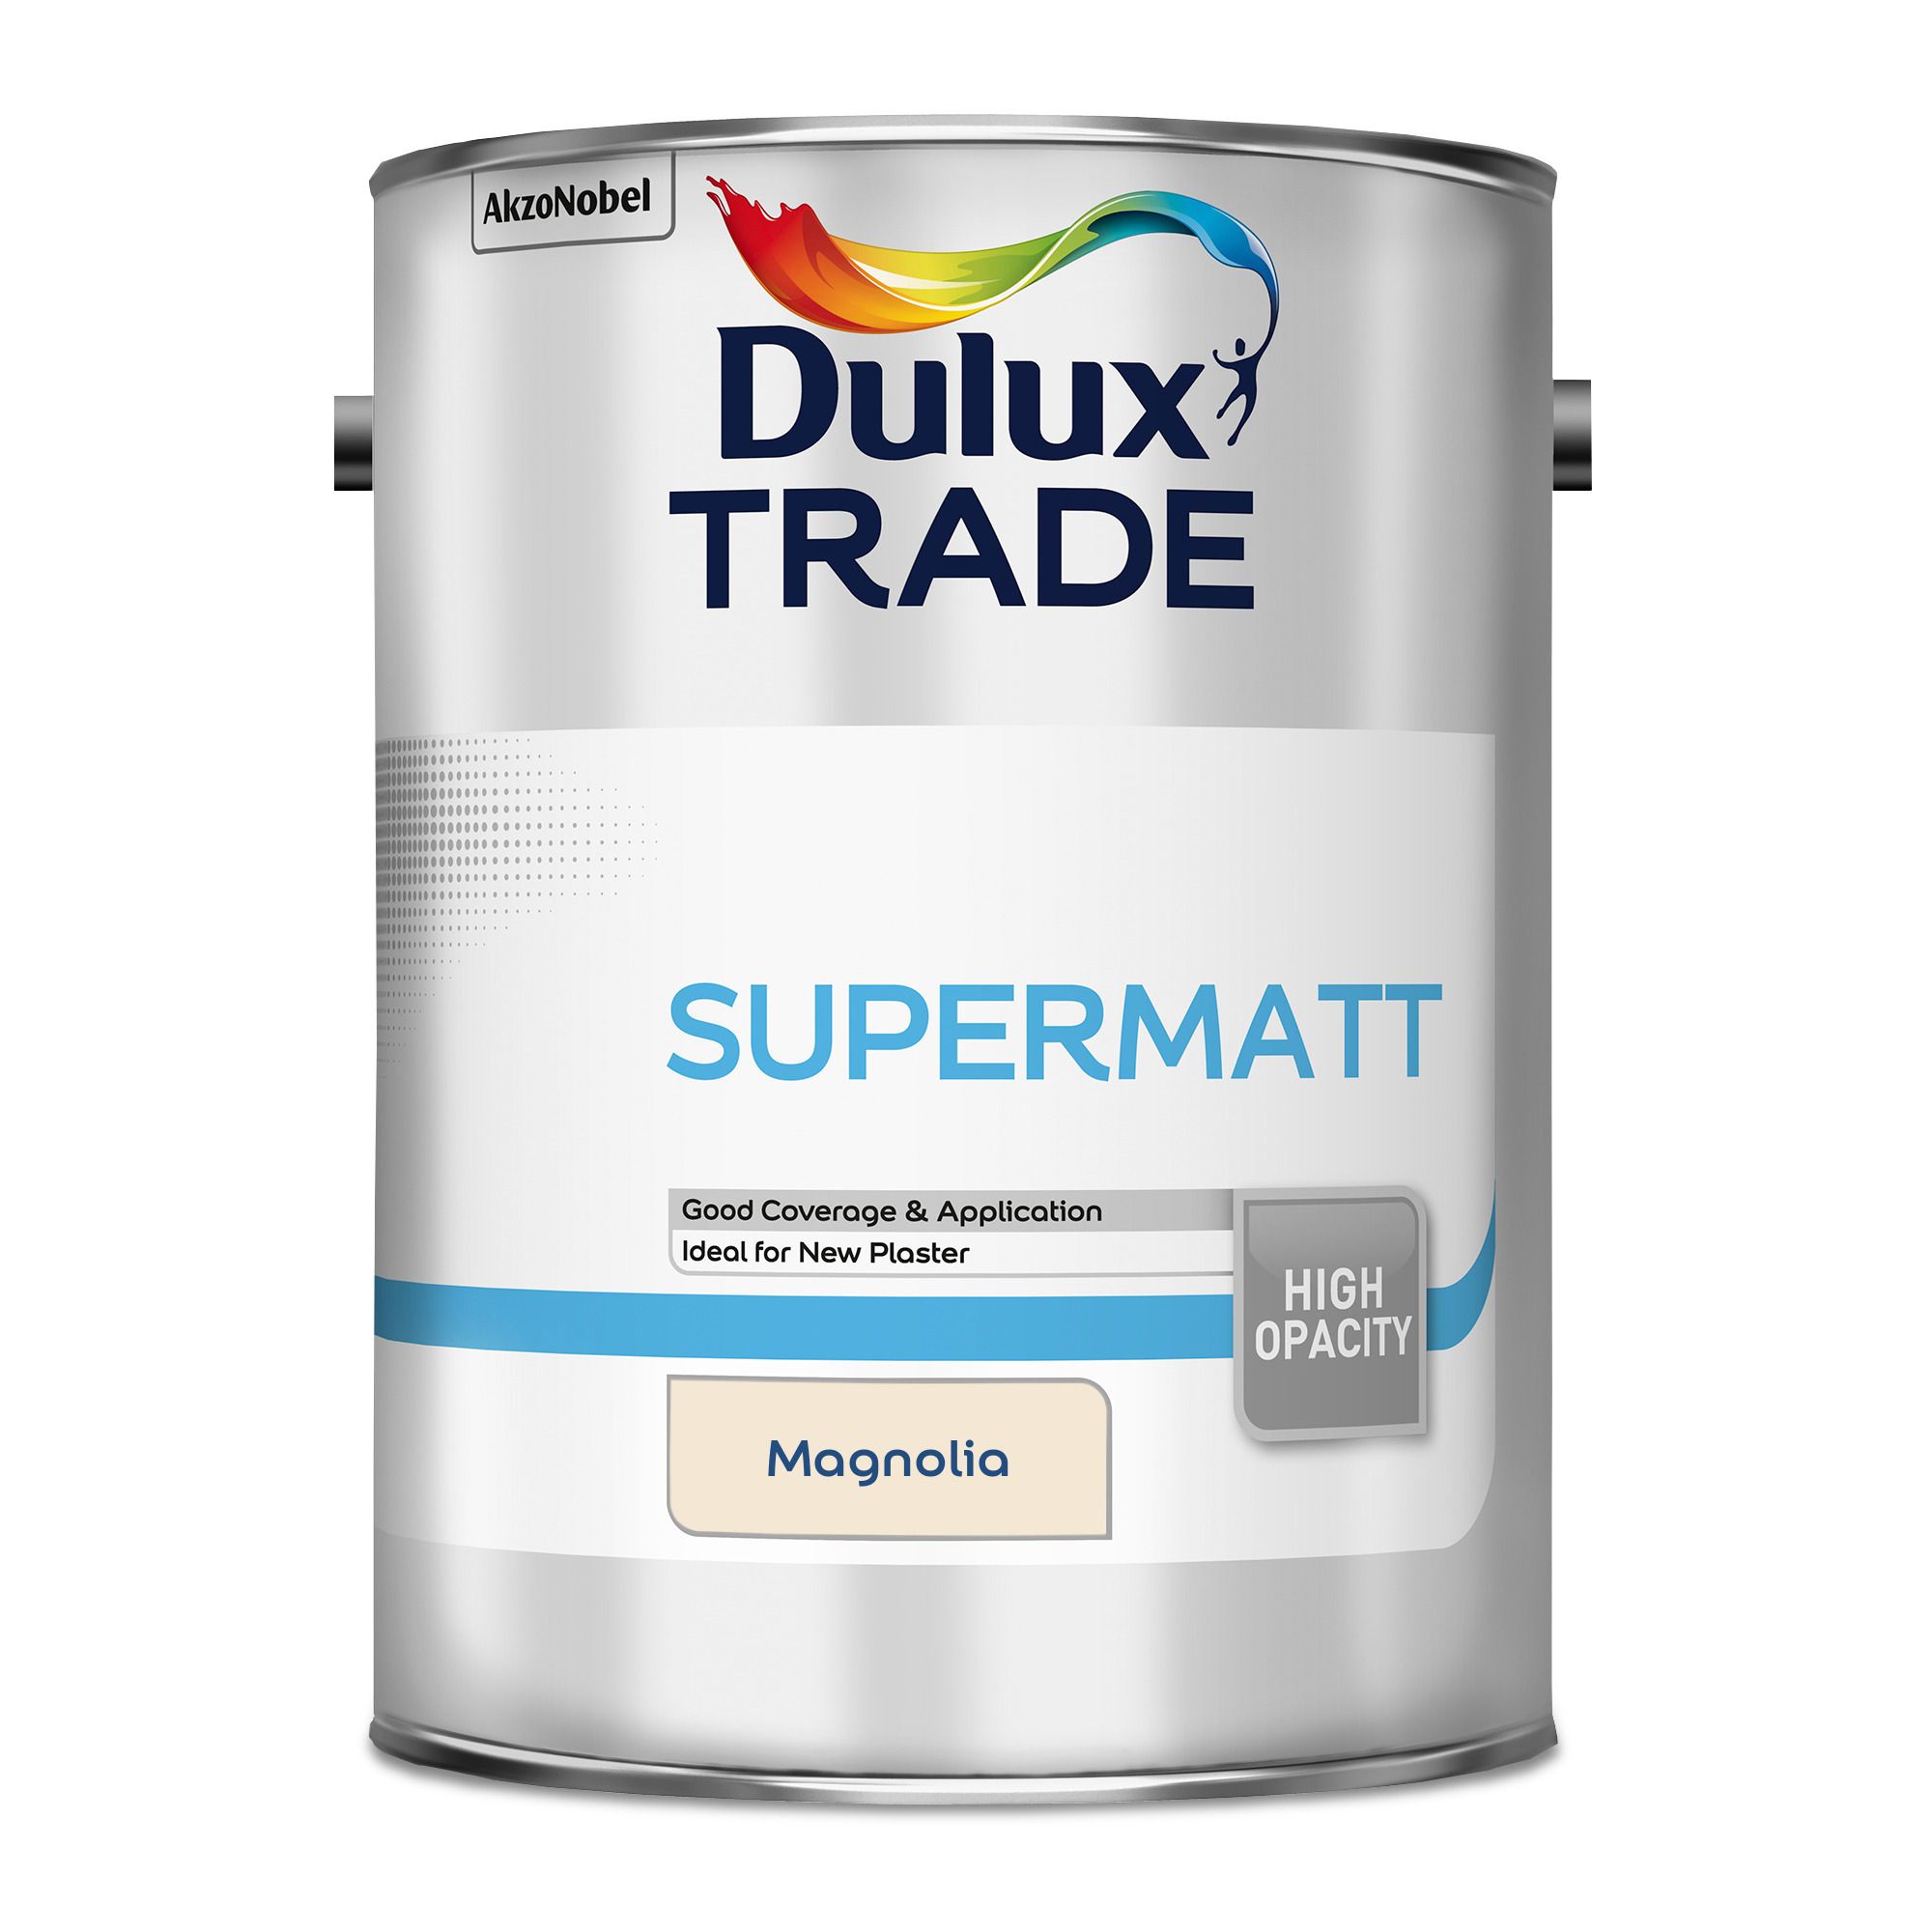 Dulux Trade Magnolia Super matt Emulsion paint, 5L